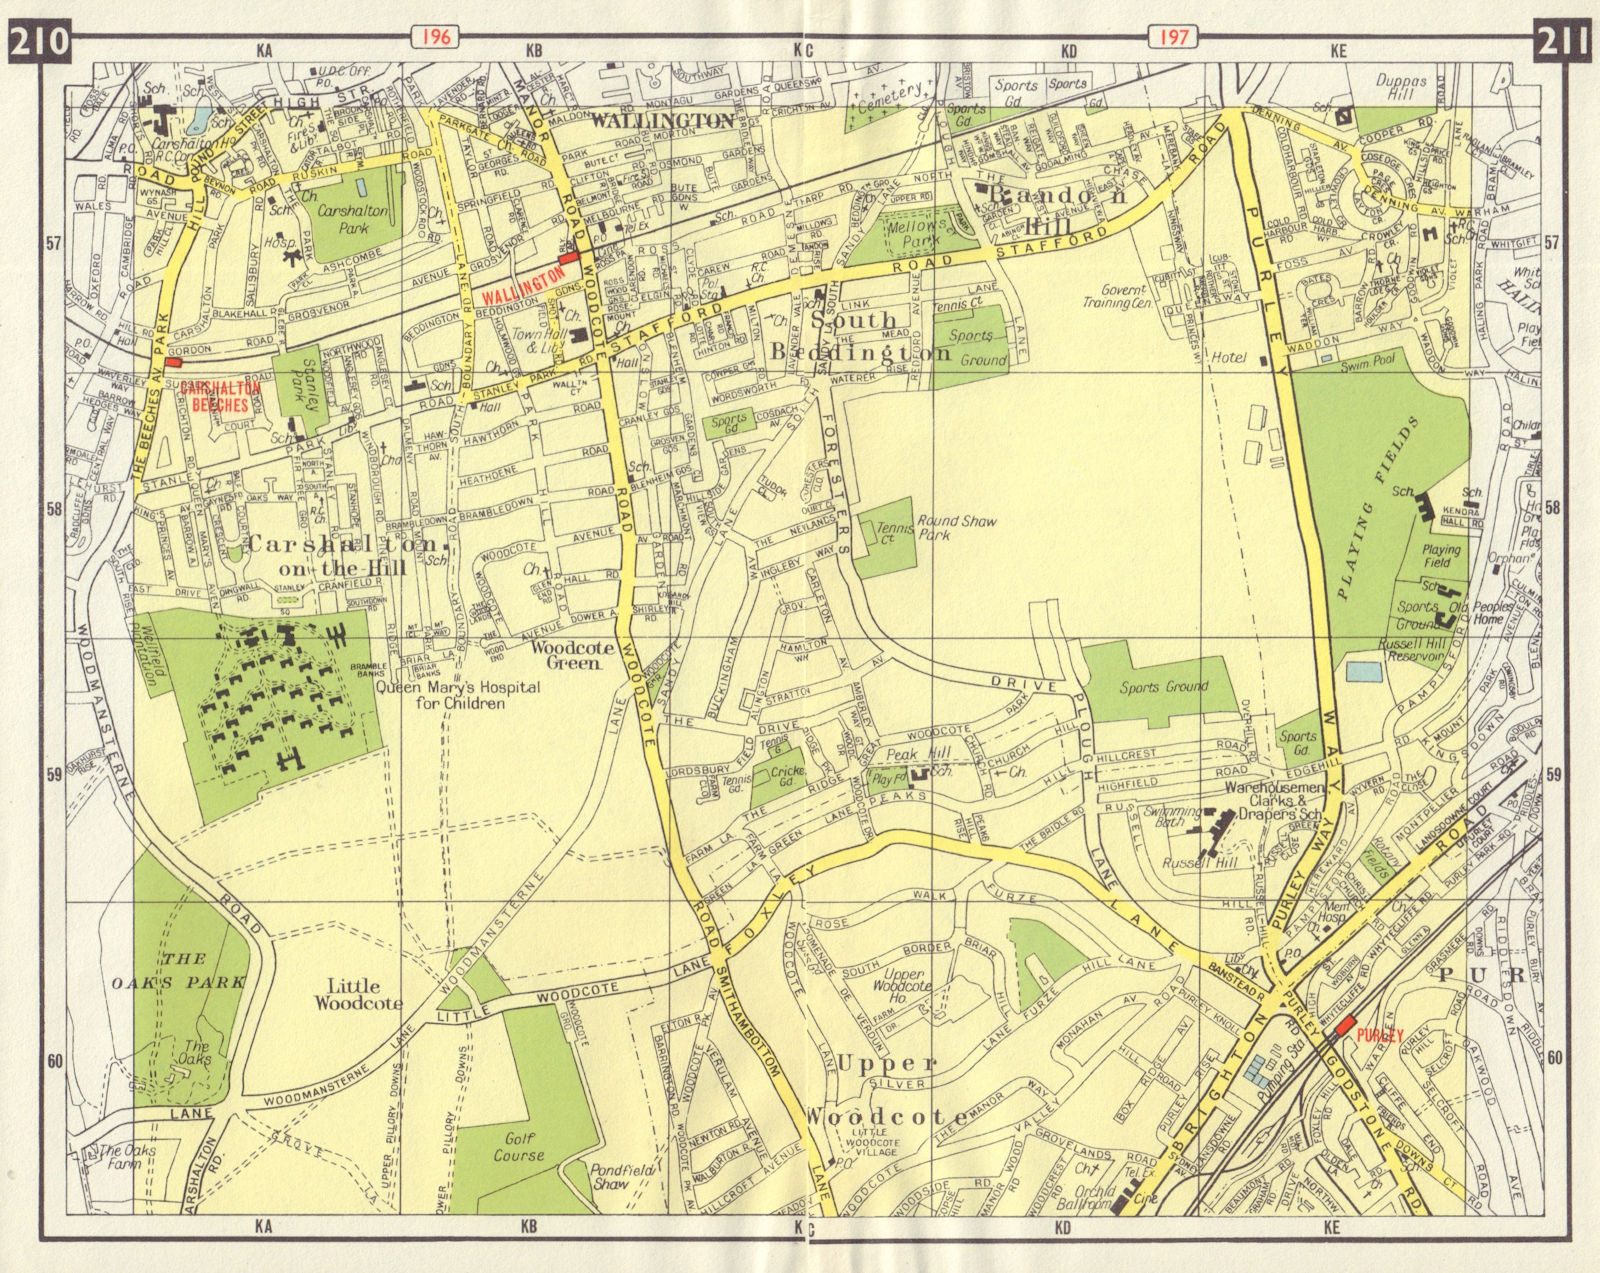 S LONDON Wallington South Beddington Carshalton Upper Woodcote Purley 1965 map